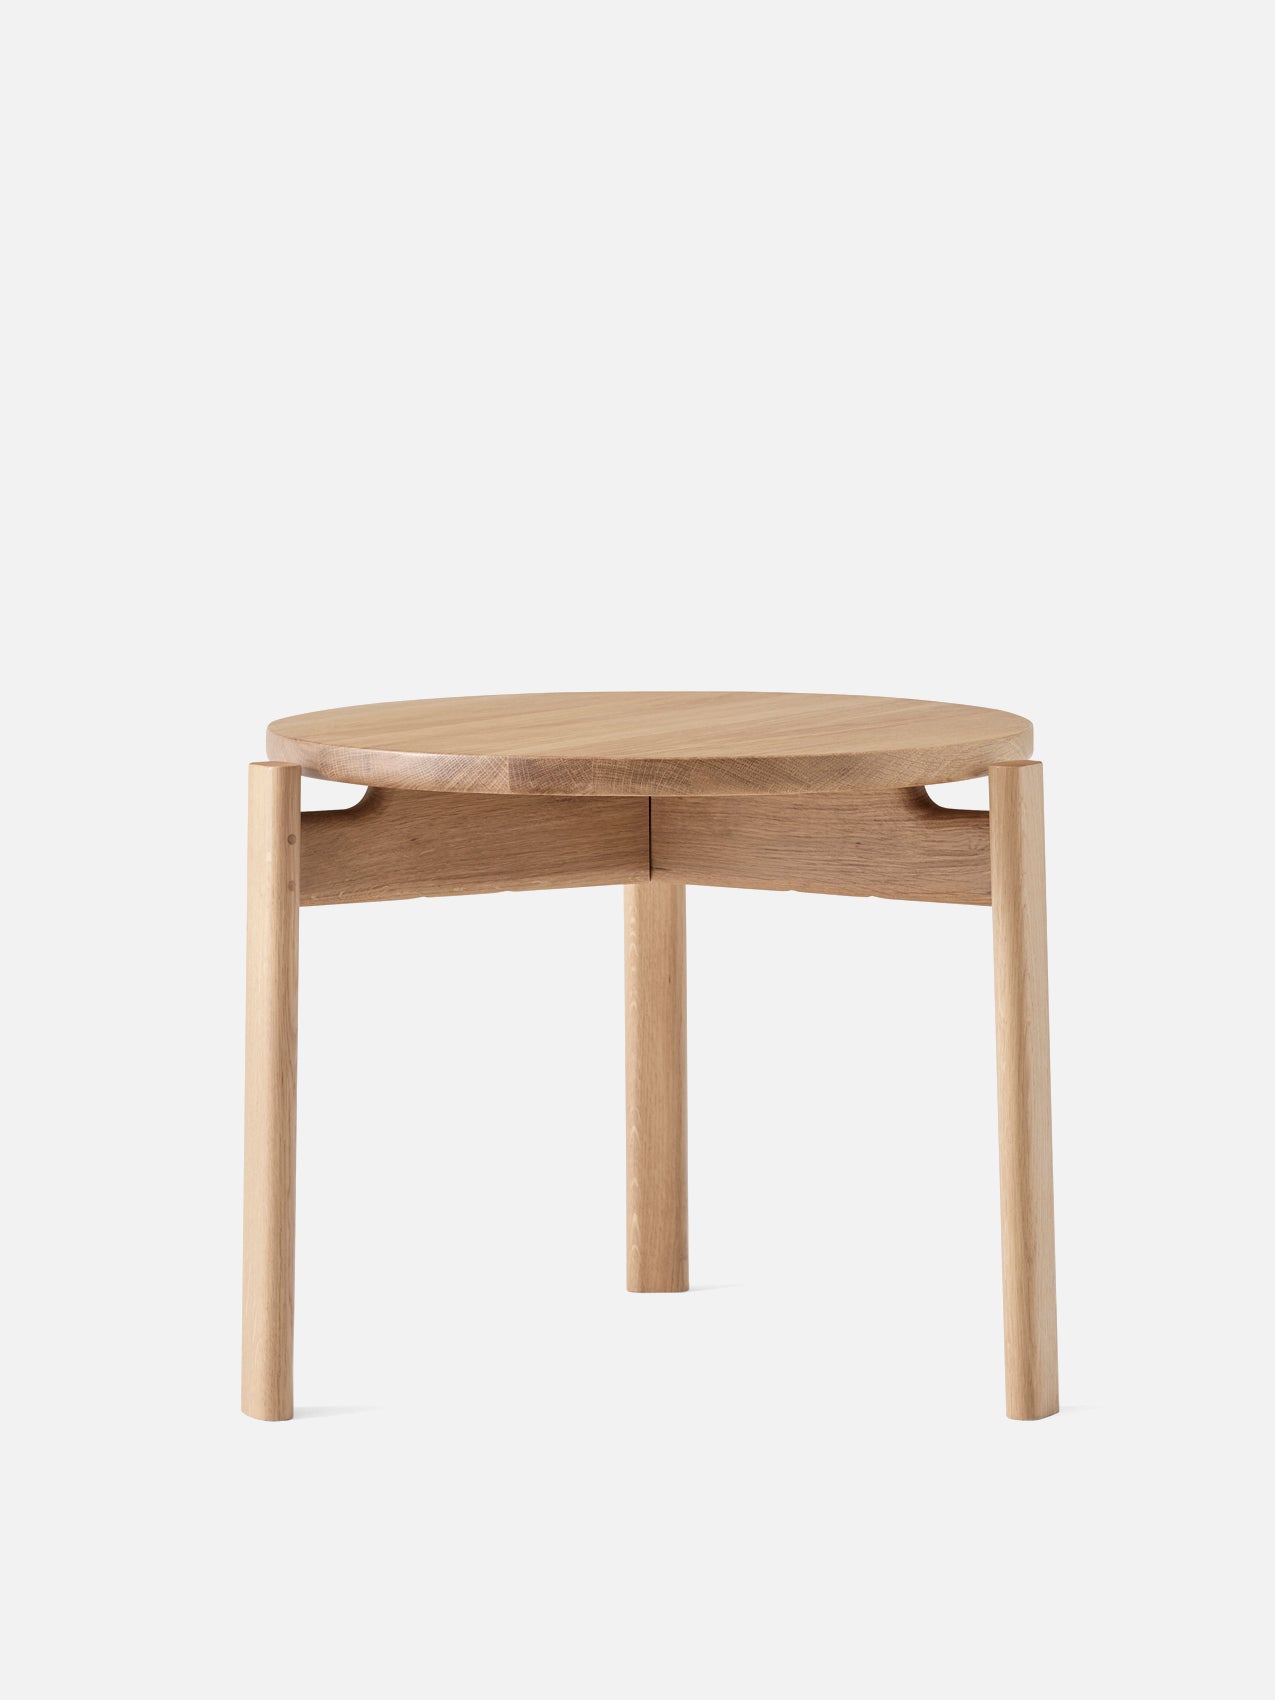 Passage Lounge Table-Side Table-Afteroom Studio-Small (19.7 inch)-Natural Oak-menu-minimalist-modern-danish-design-home-decor